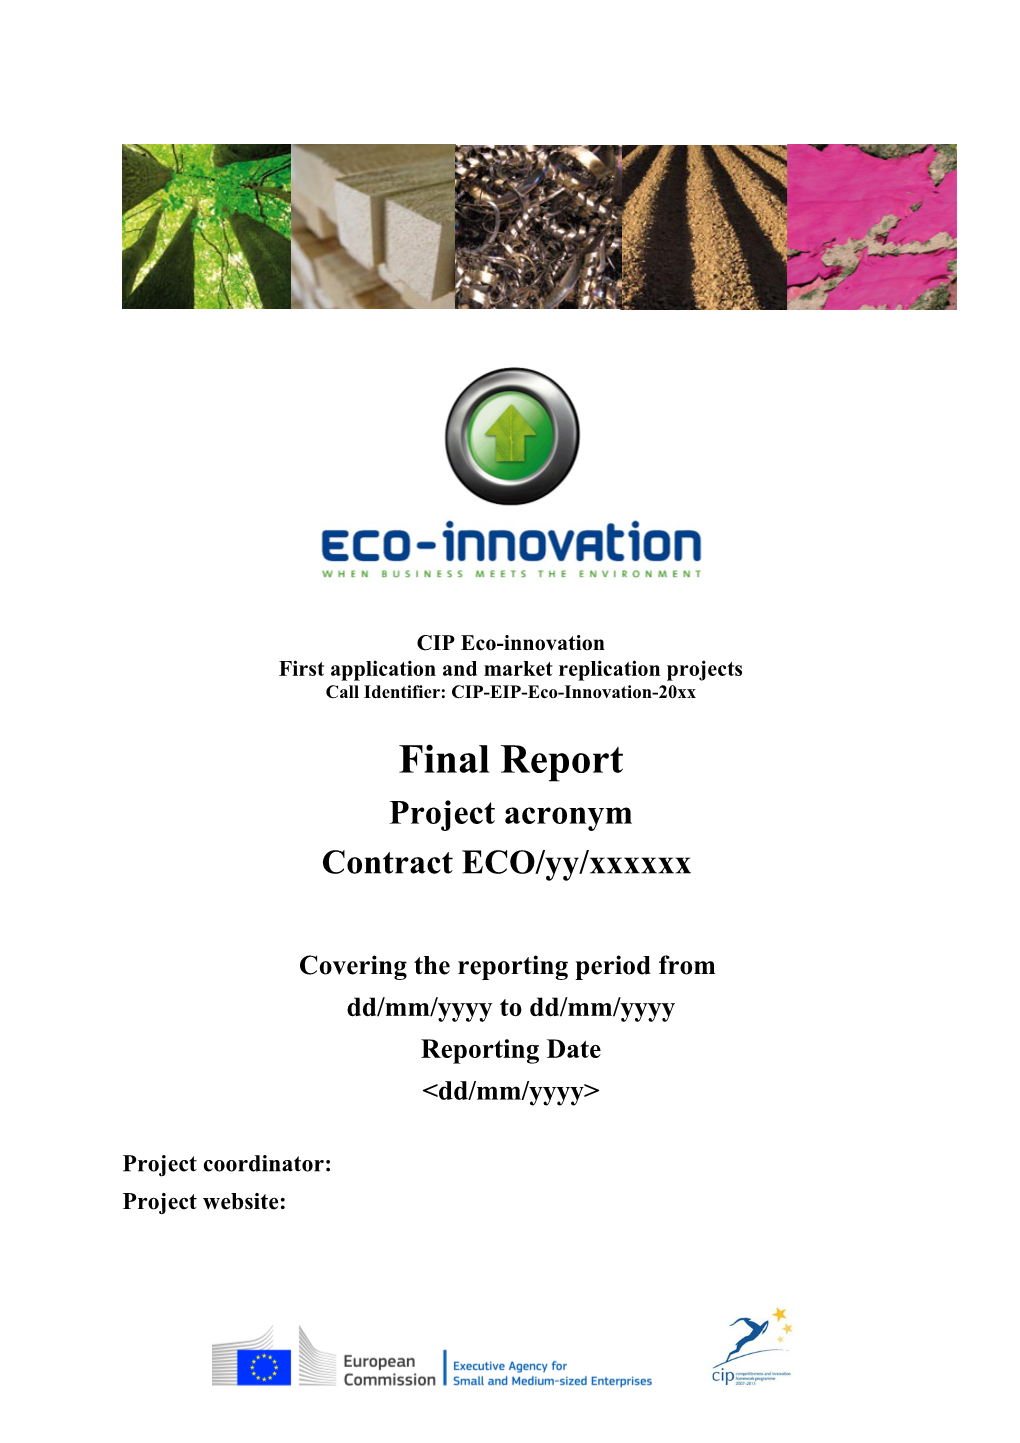 Call Identifier: CIP-EIP-Eco-Innovation-20Xx